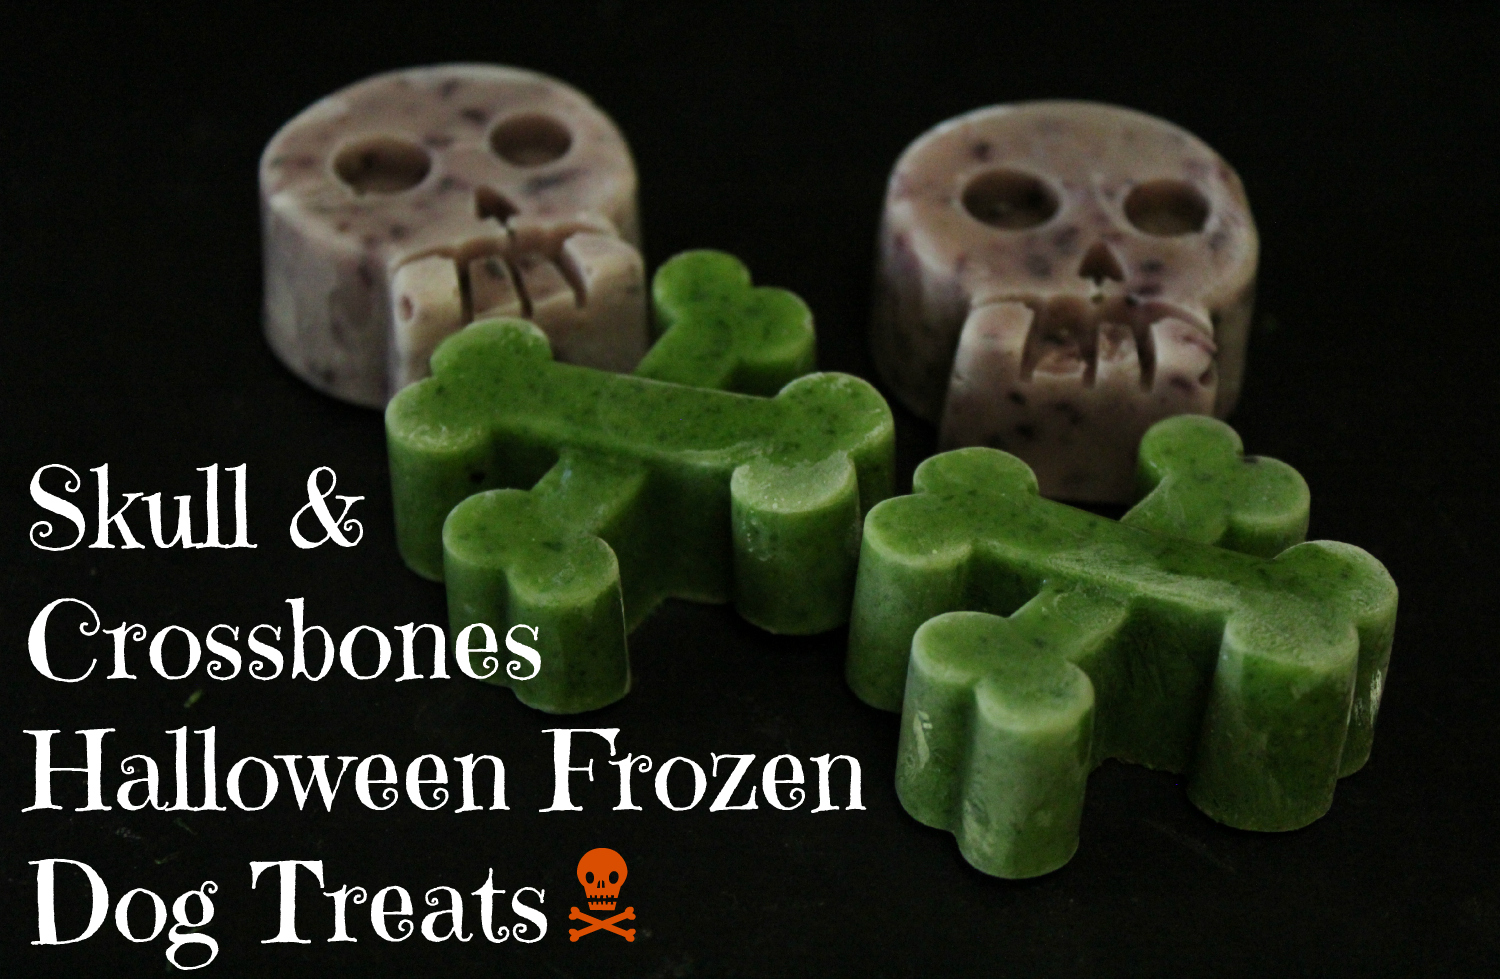 Skull & Crossbones Halloween Frozen Dog Treats